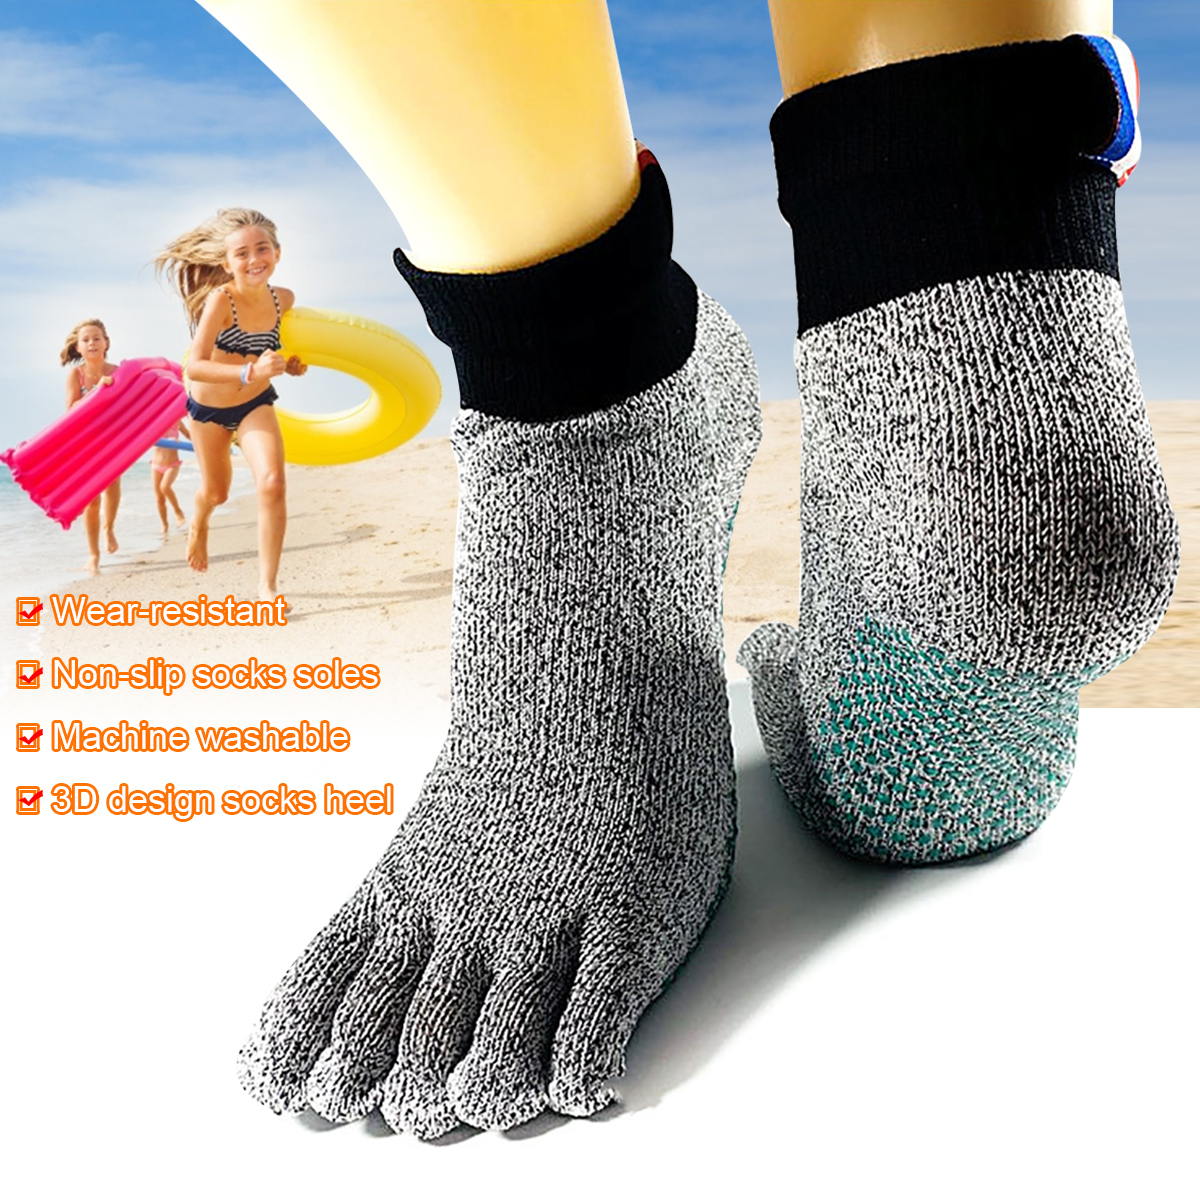 A-Pair-of-Unisex-No-Slip-Anti-Skid-Breathable-Toe-Socks-Bare-Feet-Running-Beach-HPPE-Sock-1583549-1